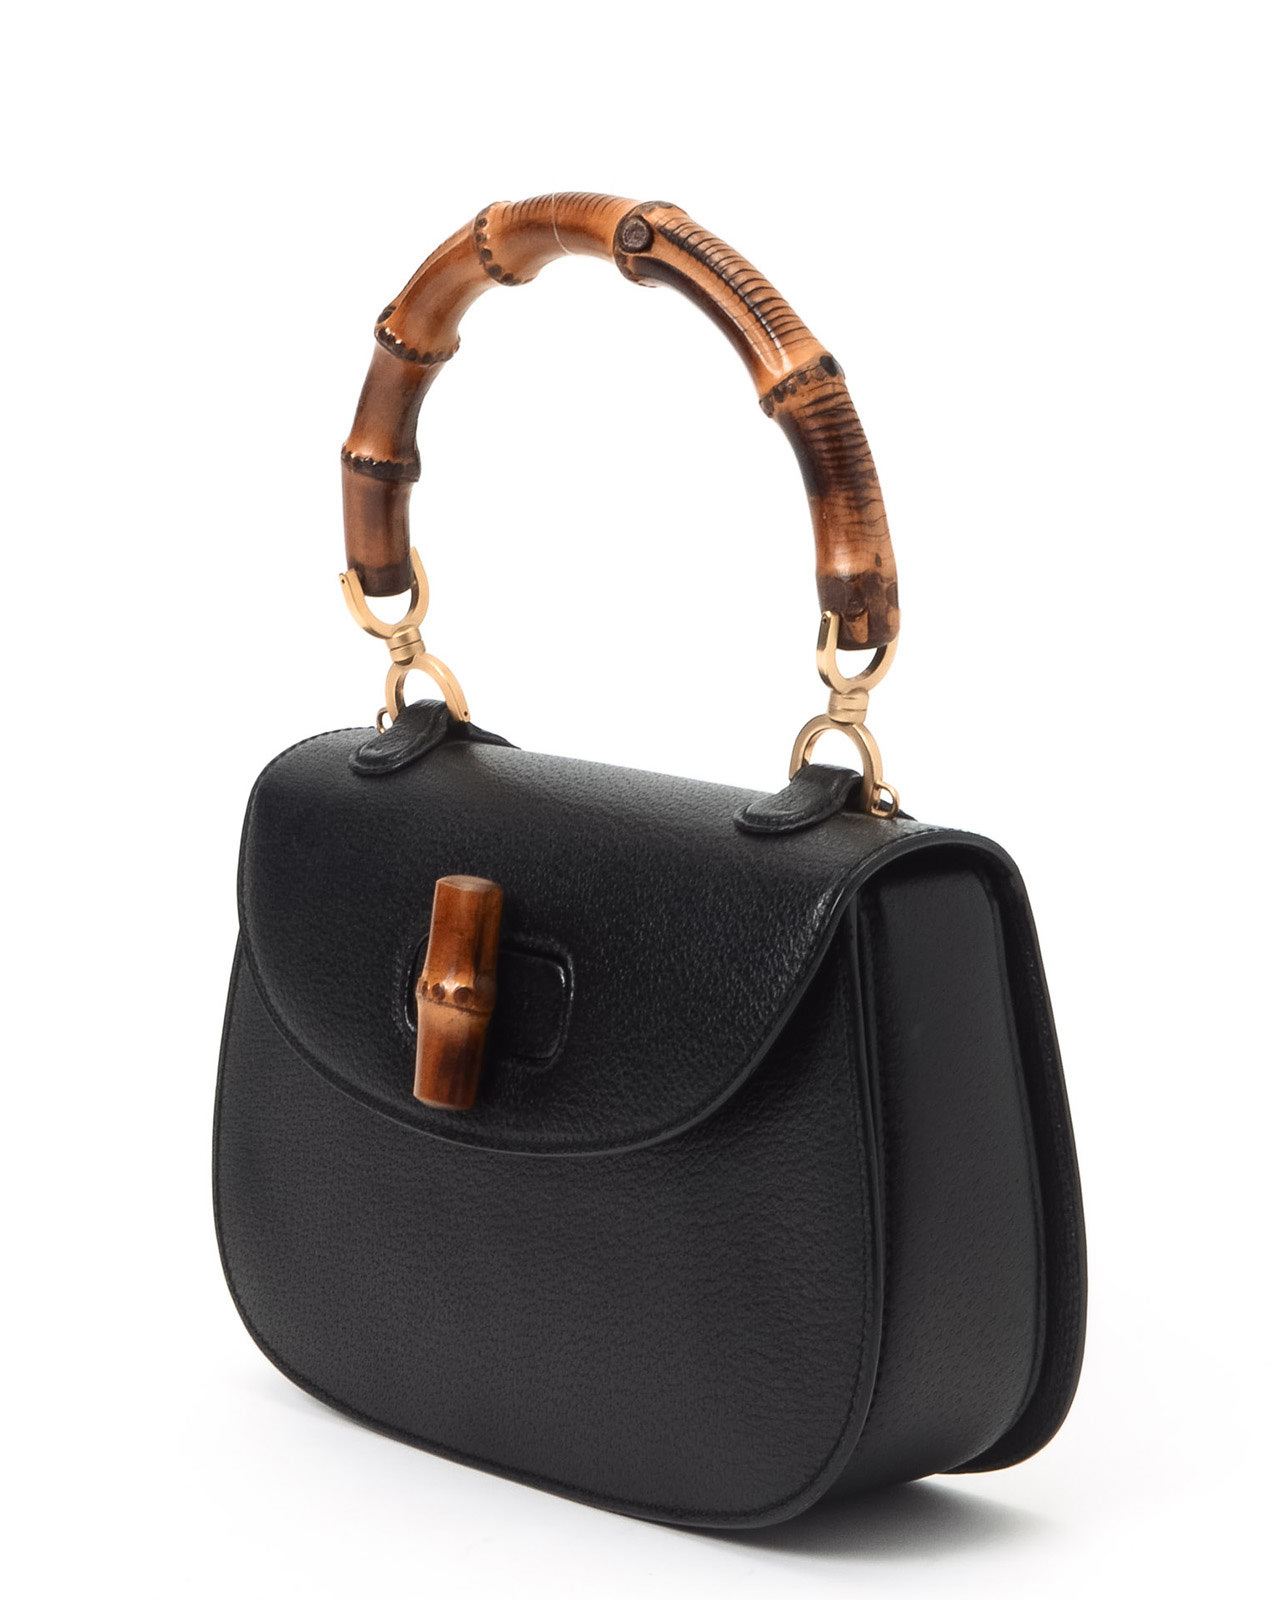 Lyst - Gucci Bamboo Handle Handbag in Black